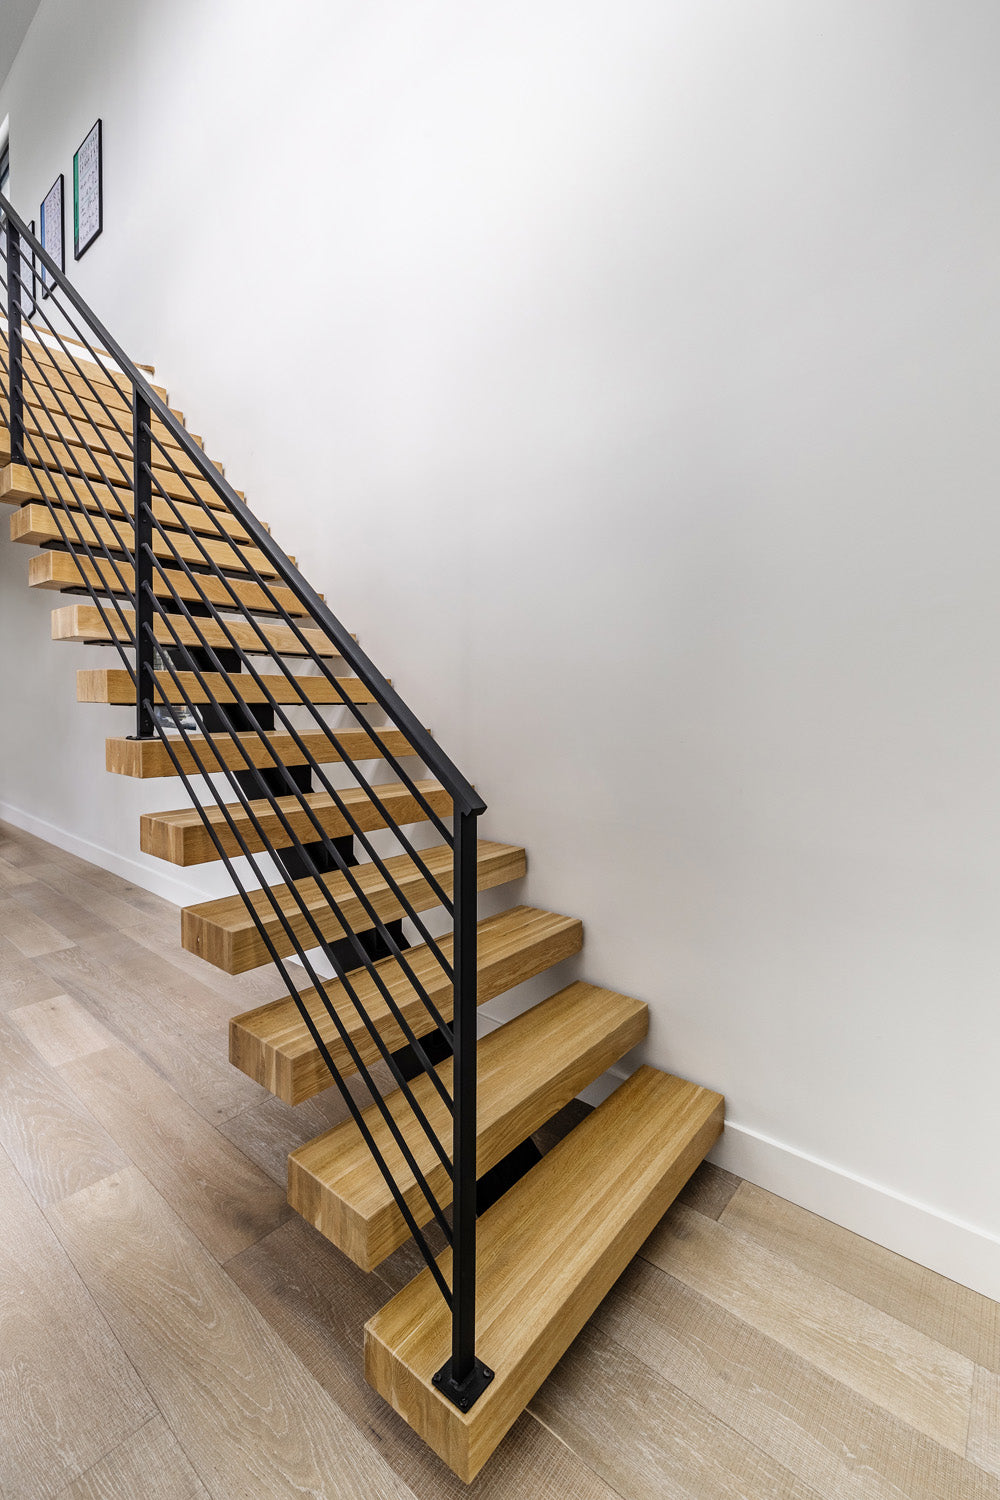 Custom stairs by Edgework Creative